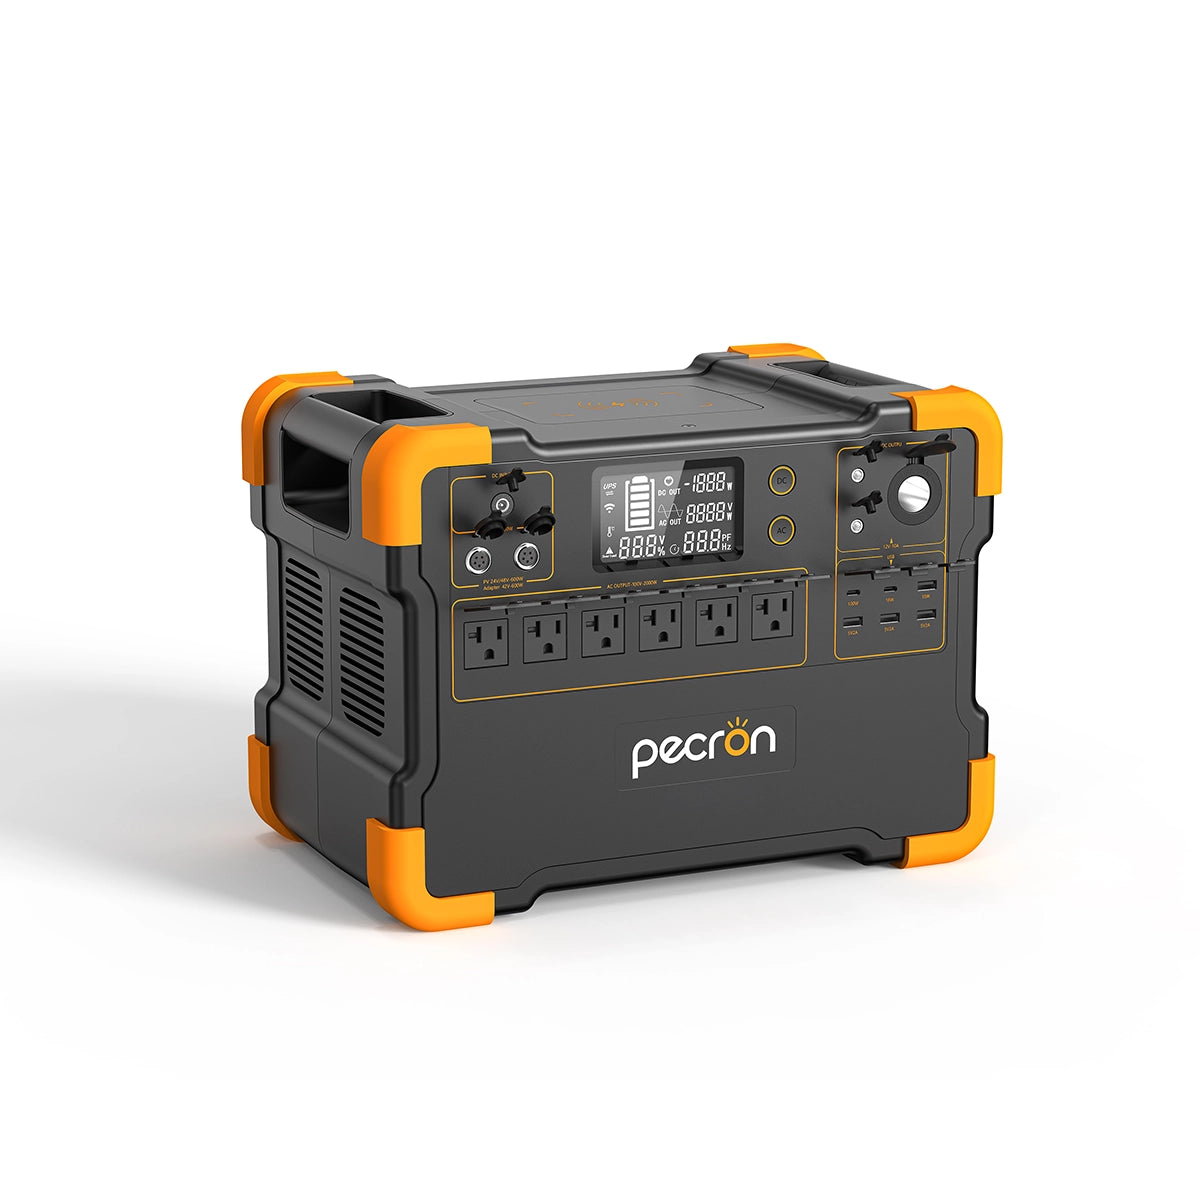 PECRON E3000 ポータブル電源「2000W＆3108Wh」